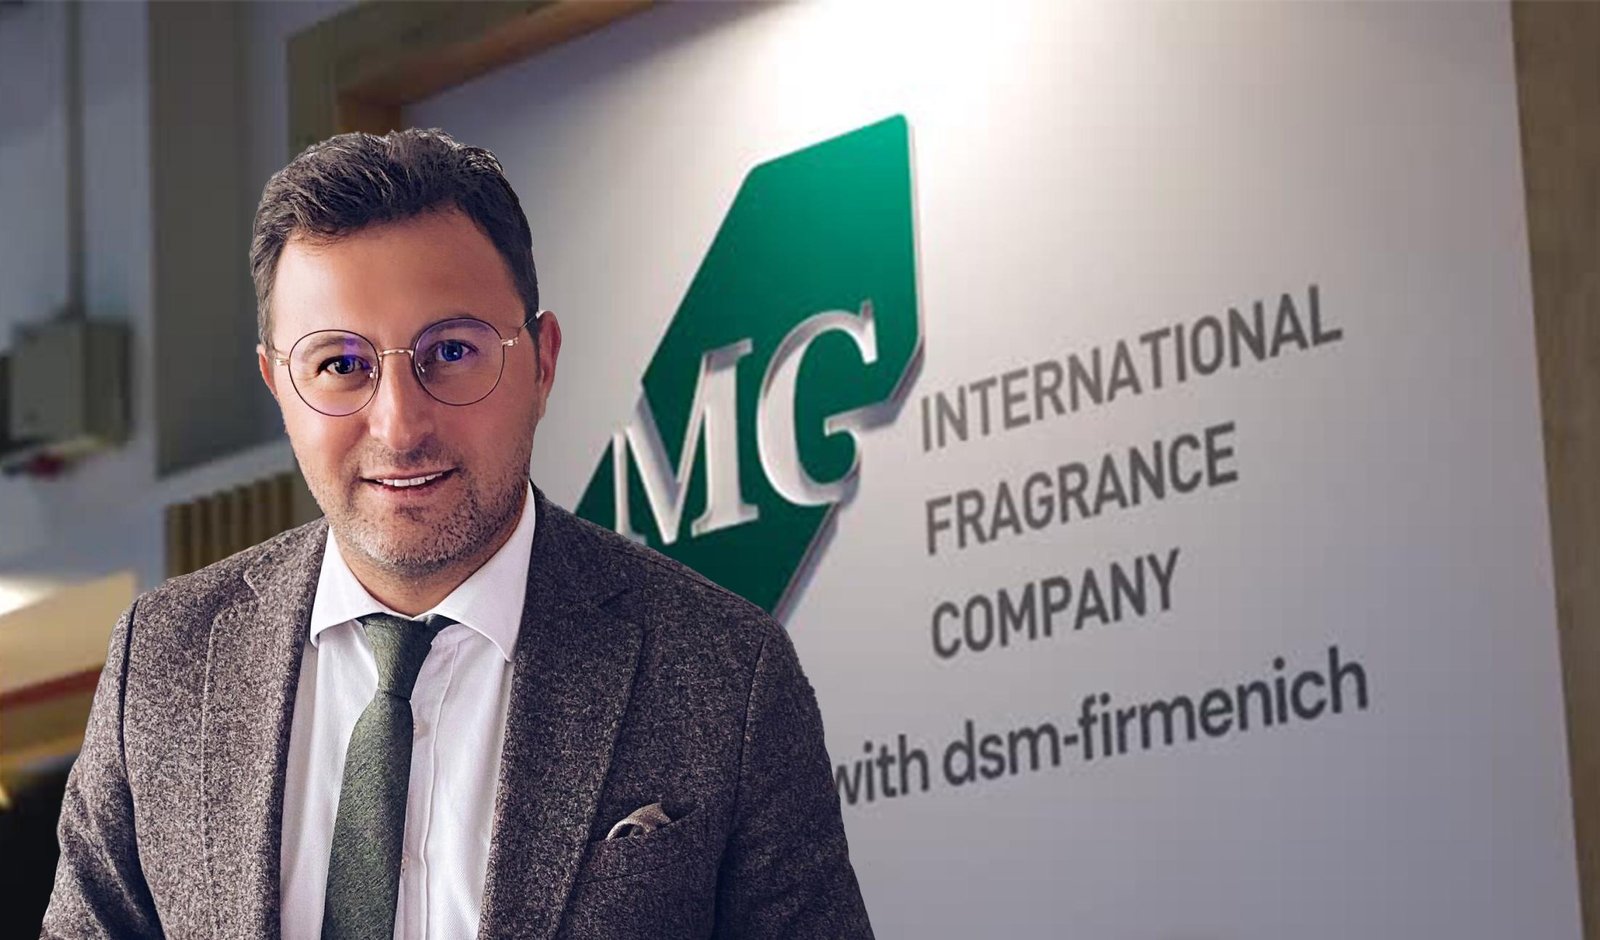 MG International Fragrance Company’den sürdürülebilirliğe yatırım